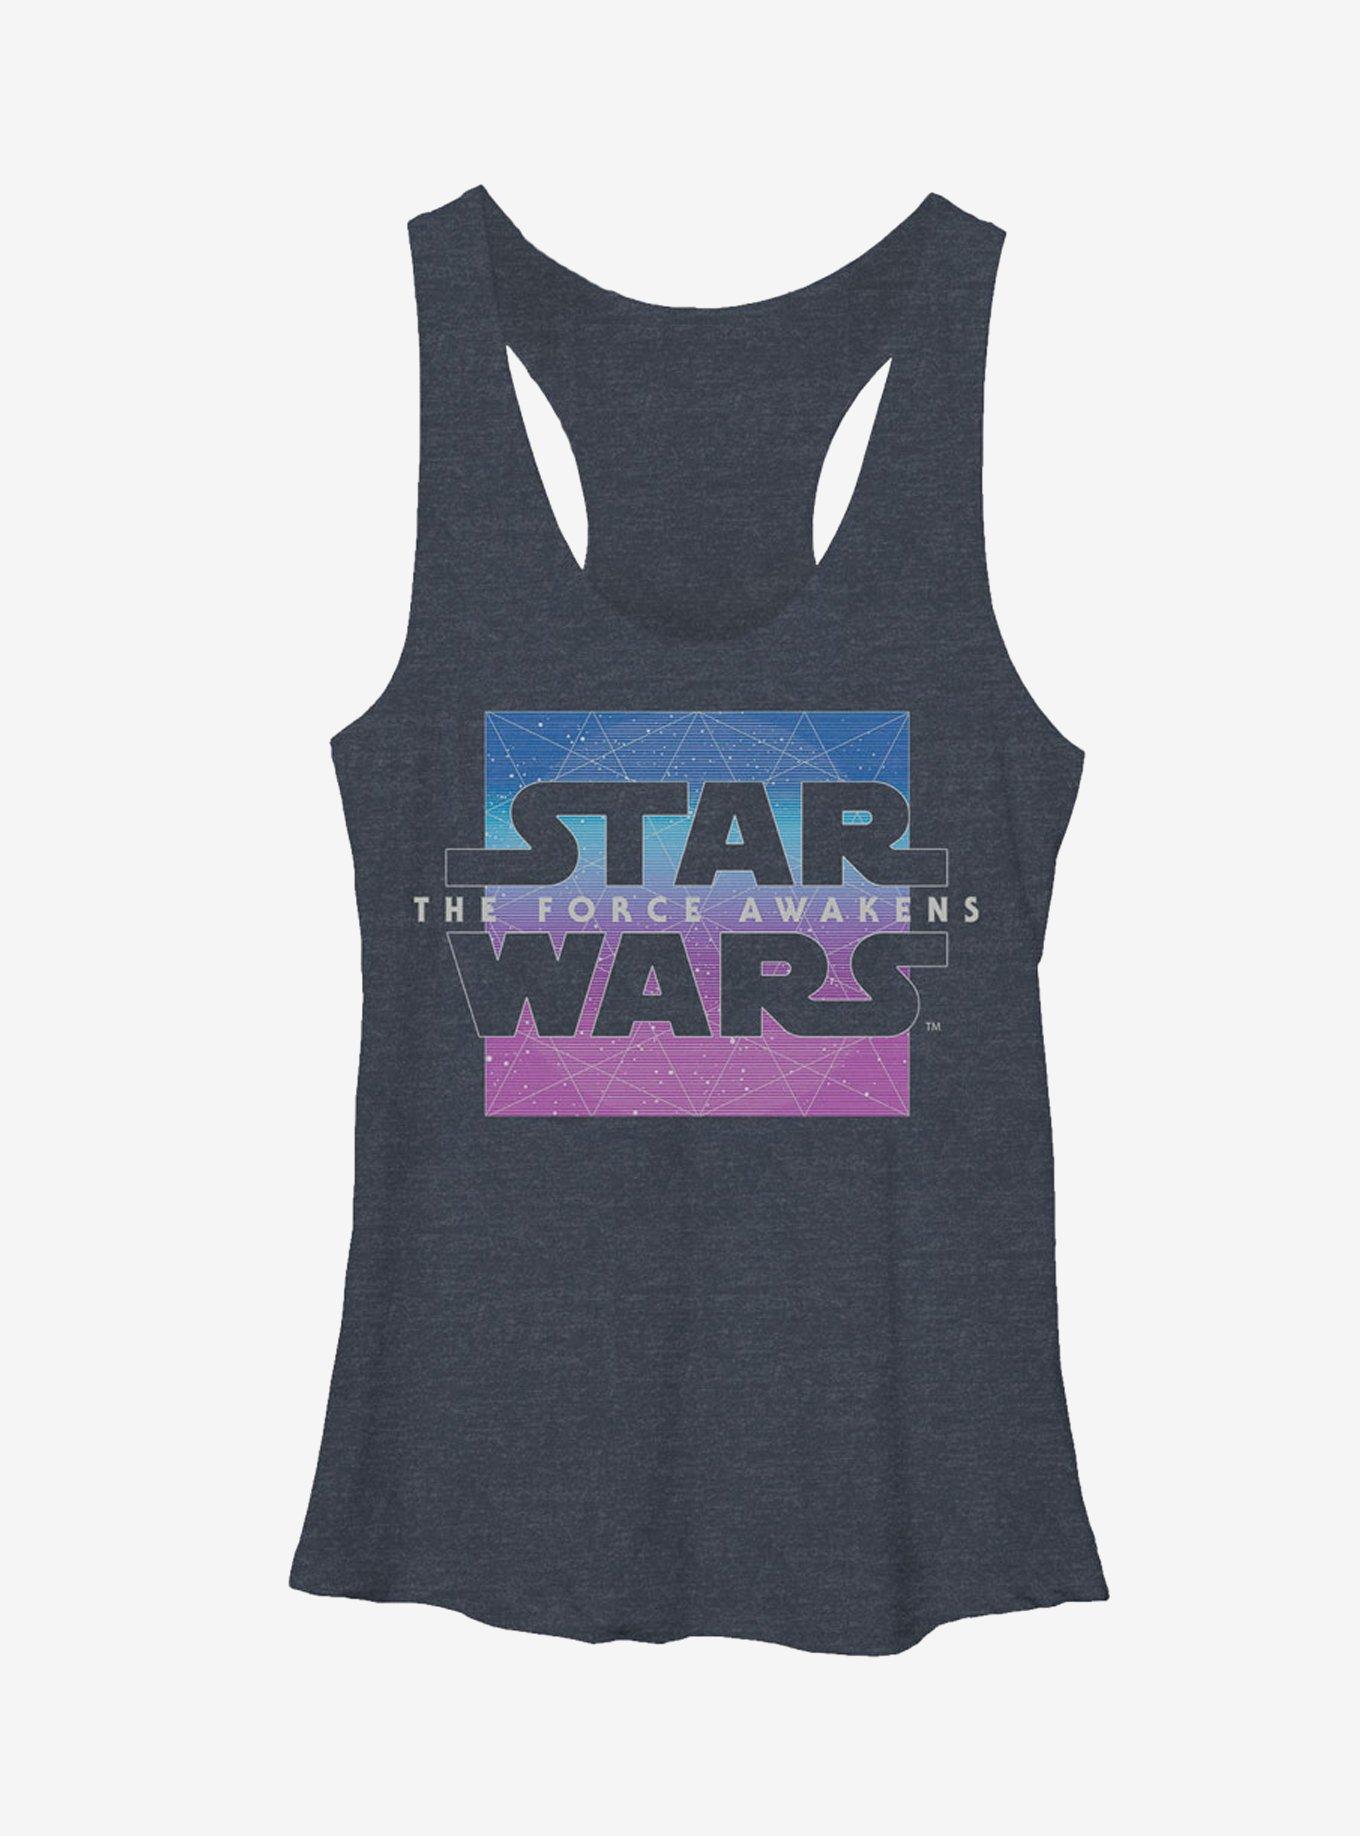 Star Wars Episode VII Constellation Logo Girls Tanks